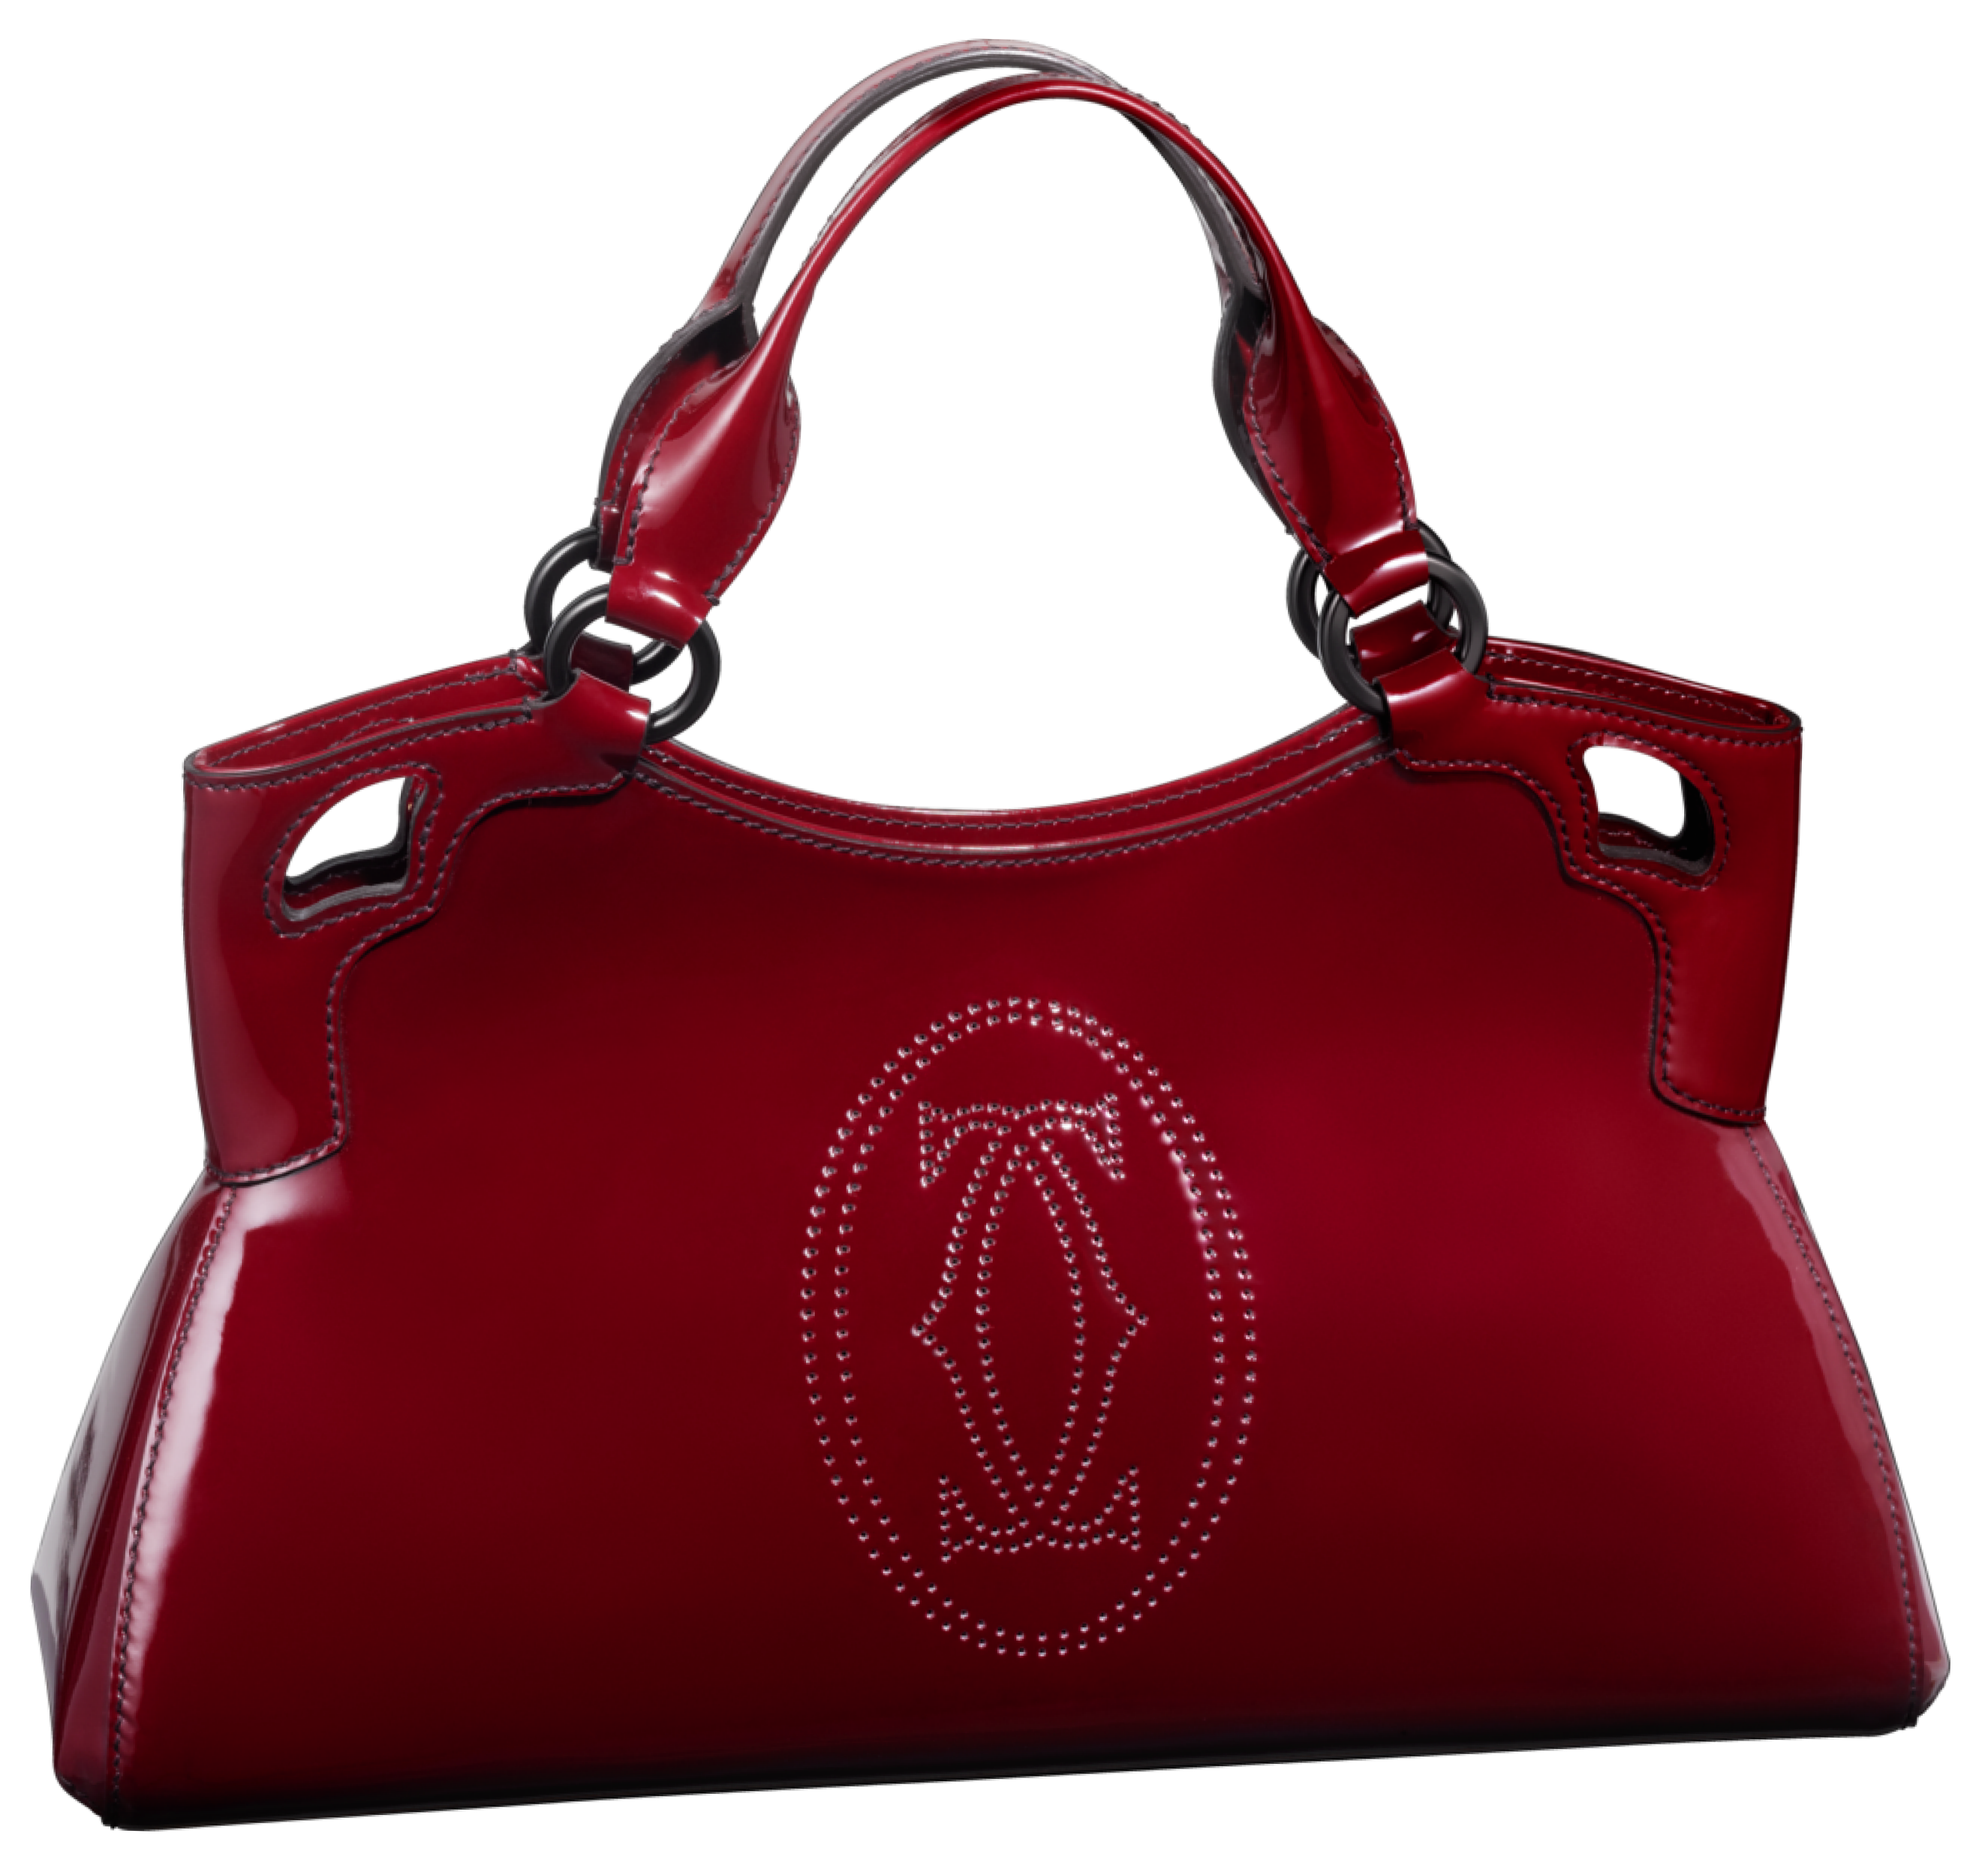 Chanel Handbag Cartier Leather - women bag png download - 2649